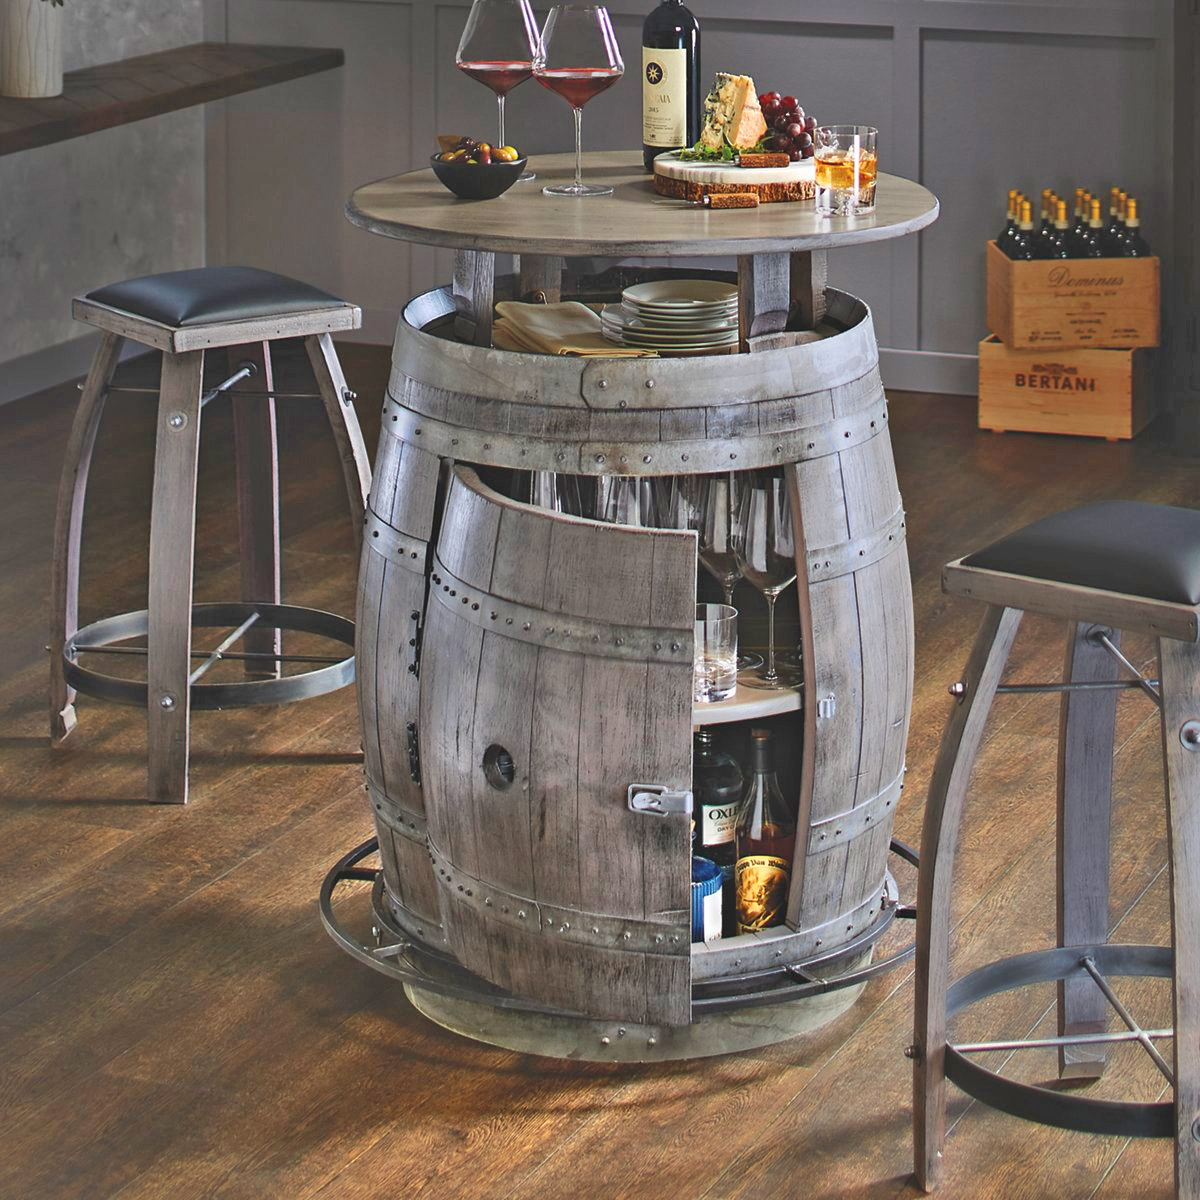 Ultimate Wine Barrel Table Has a Hidden Storage Inside